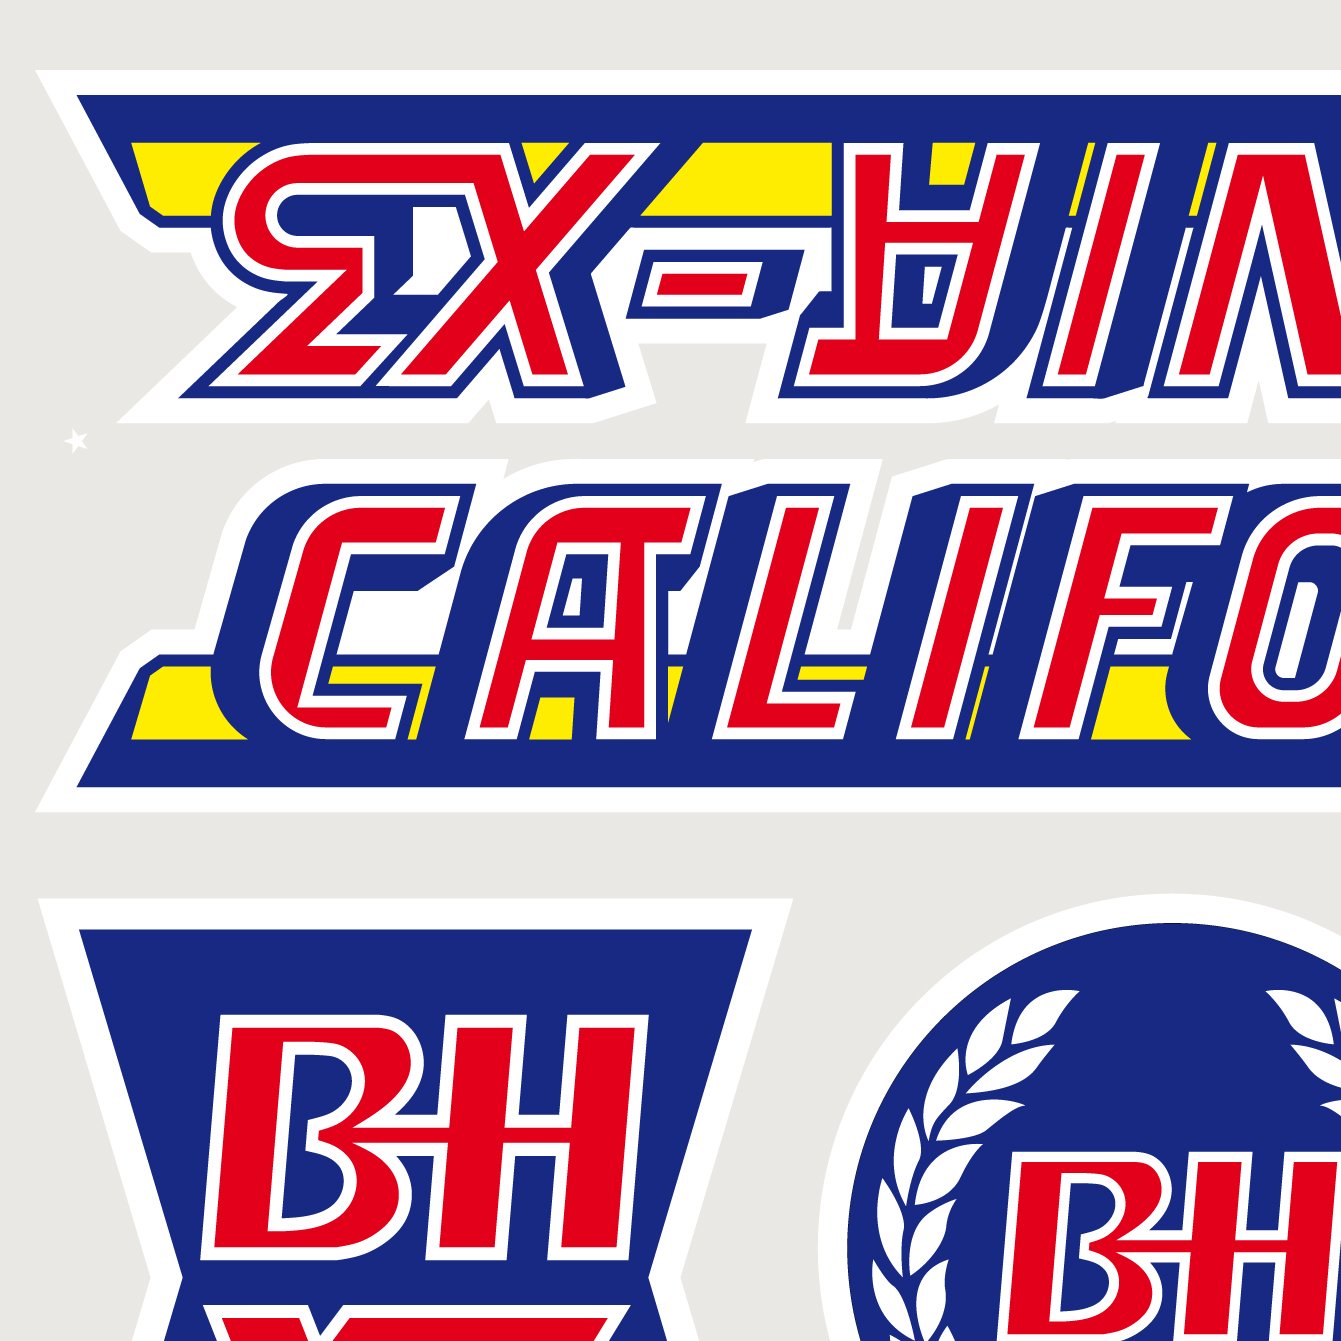 Image of BH CALIFORNIA X3